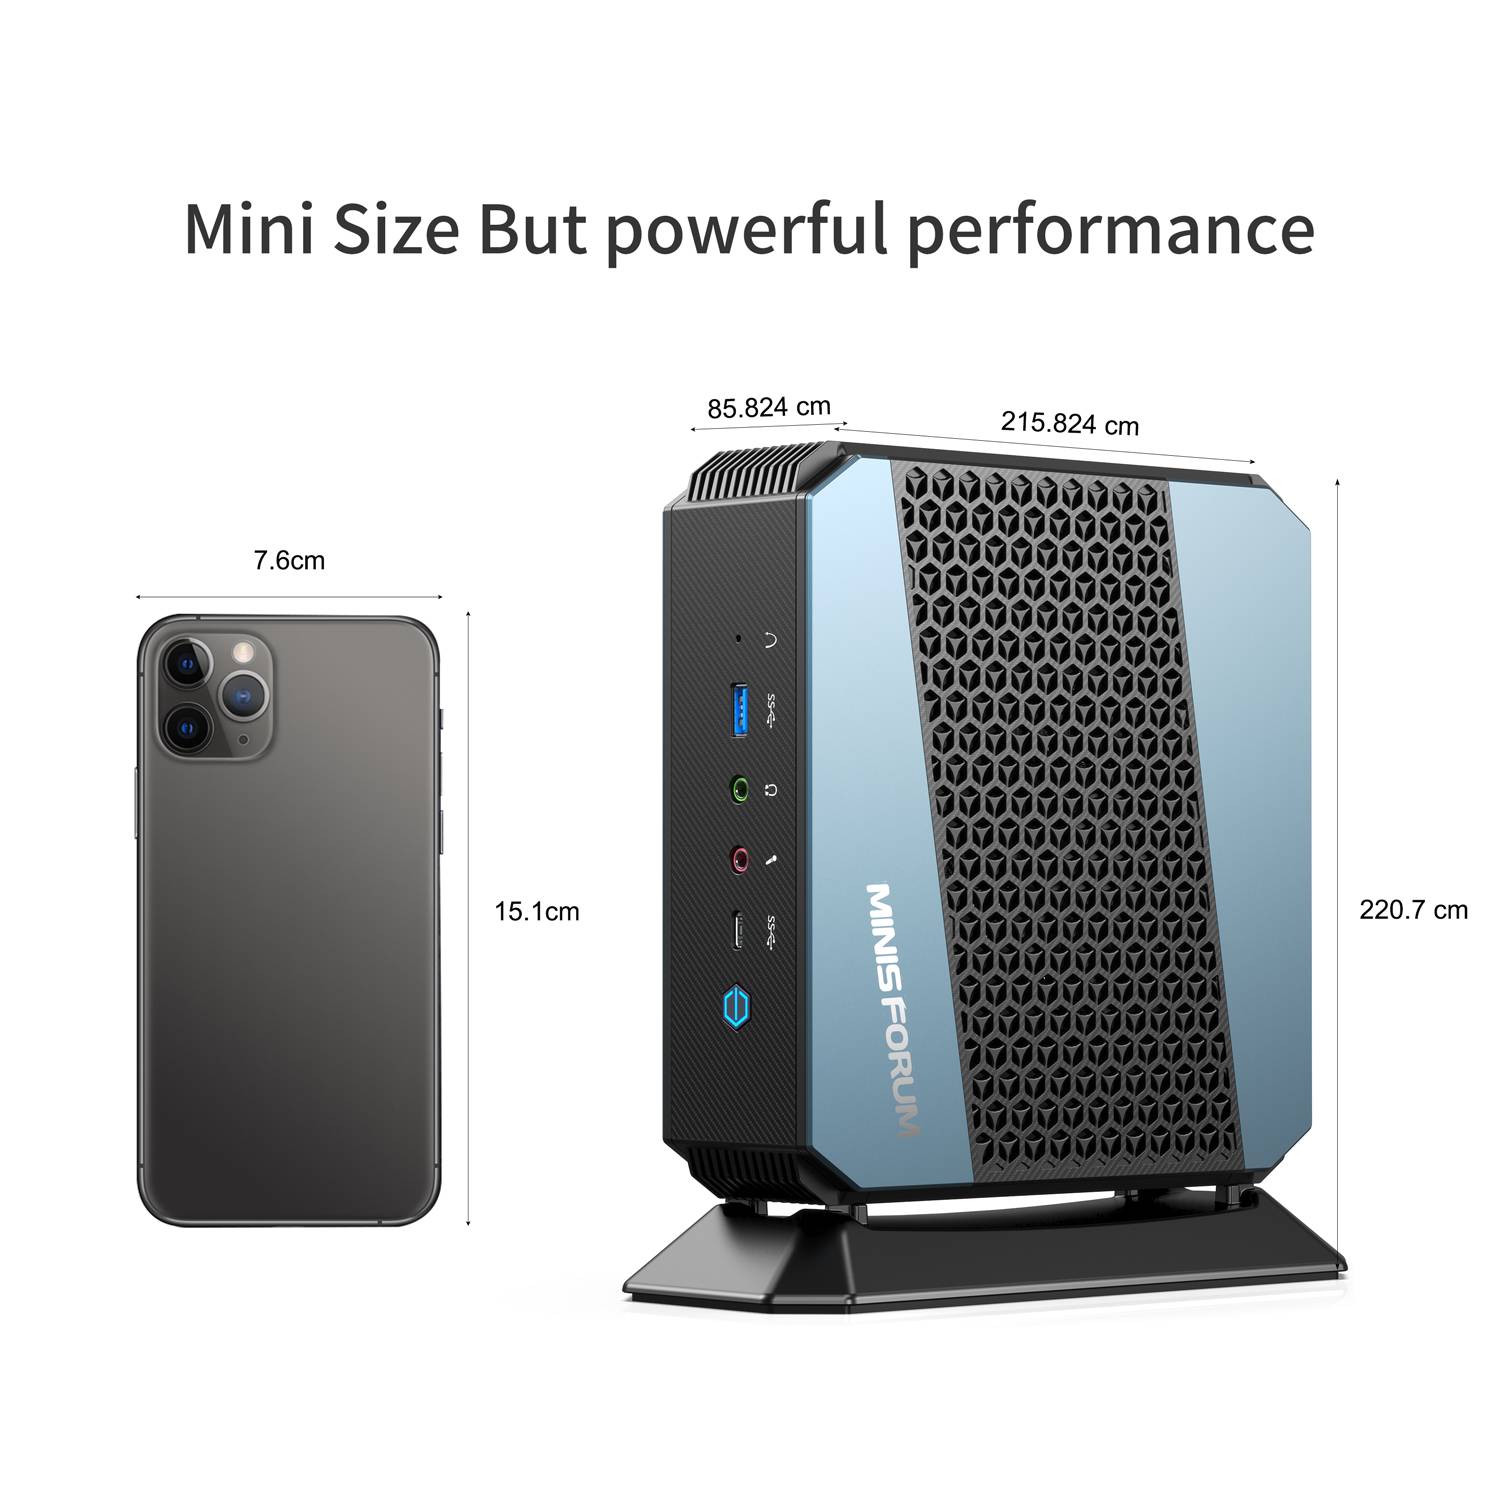 Image showing MinisForum HX90 EliteMini Mini PC comparing size with iPhone